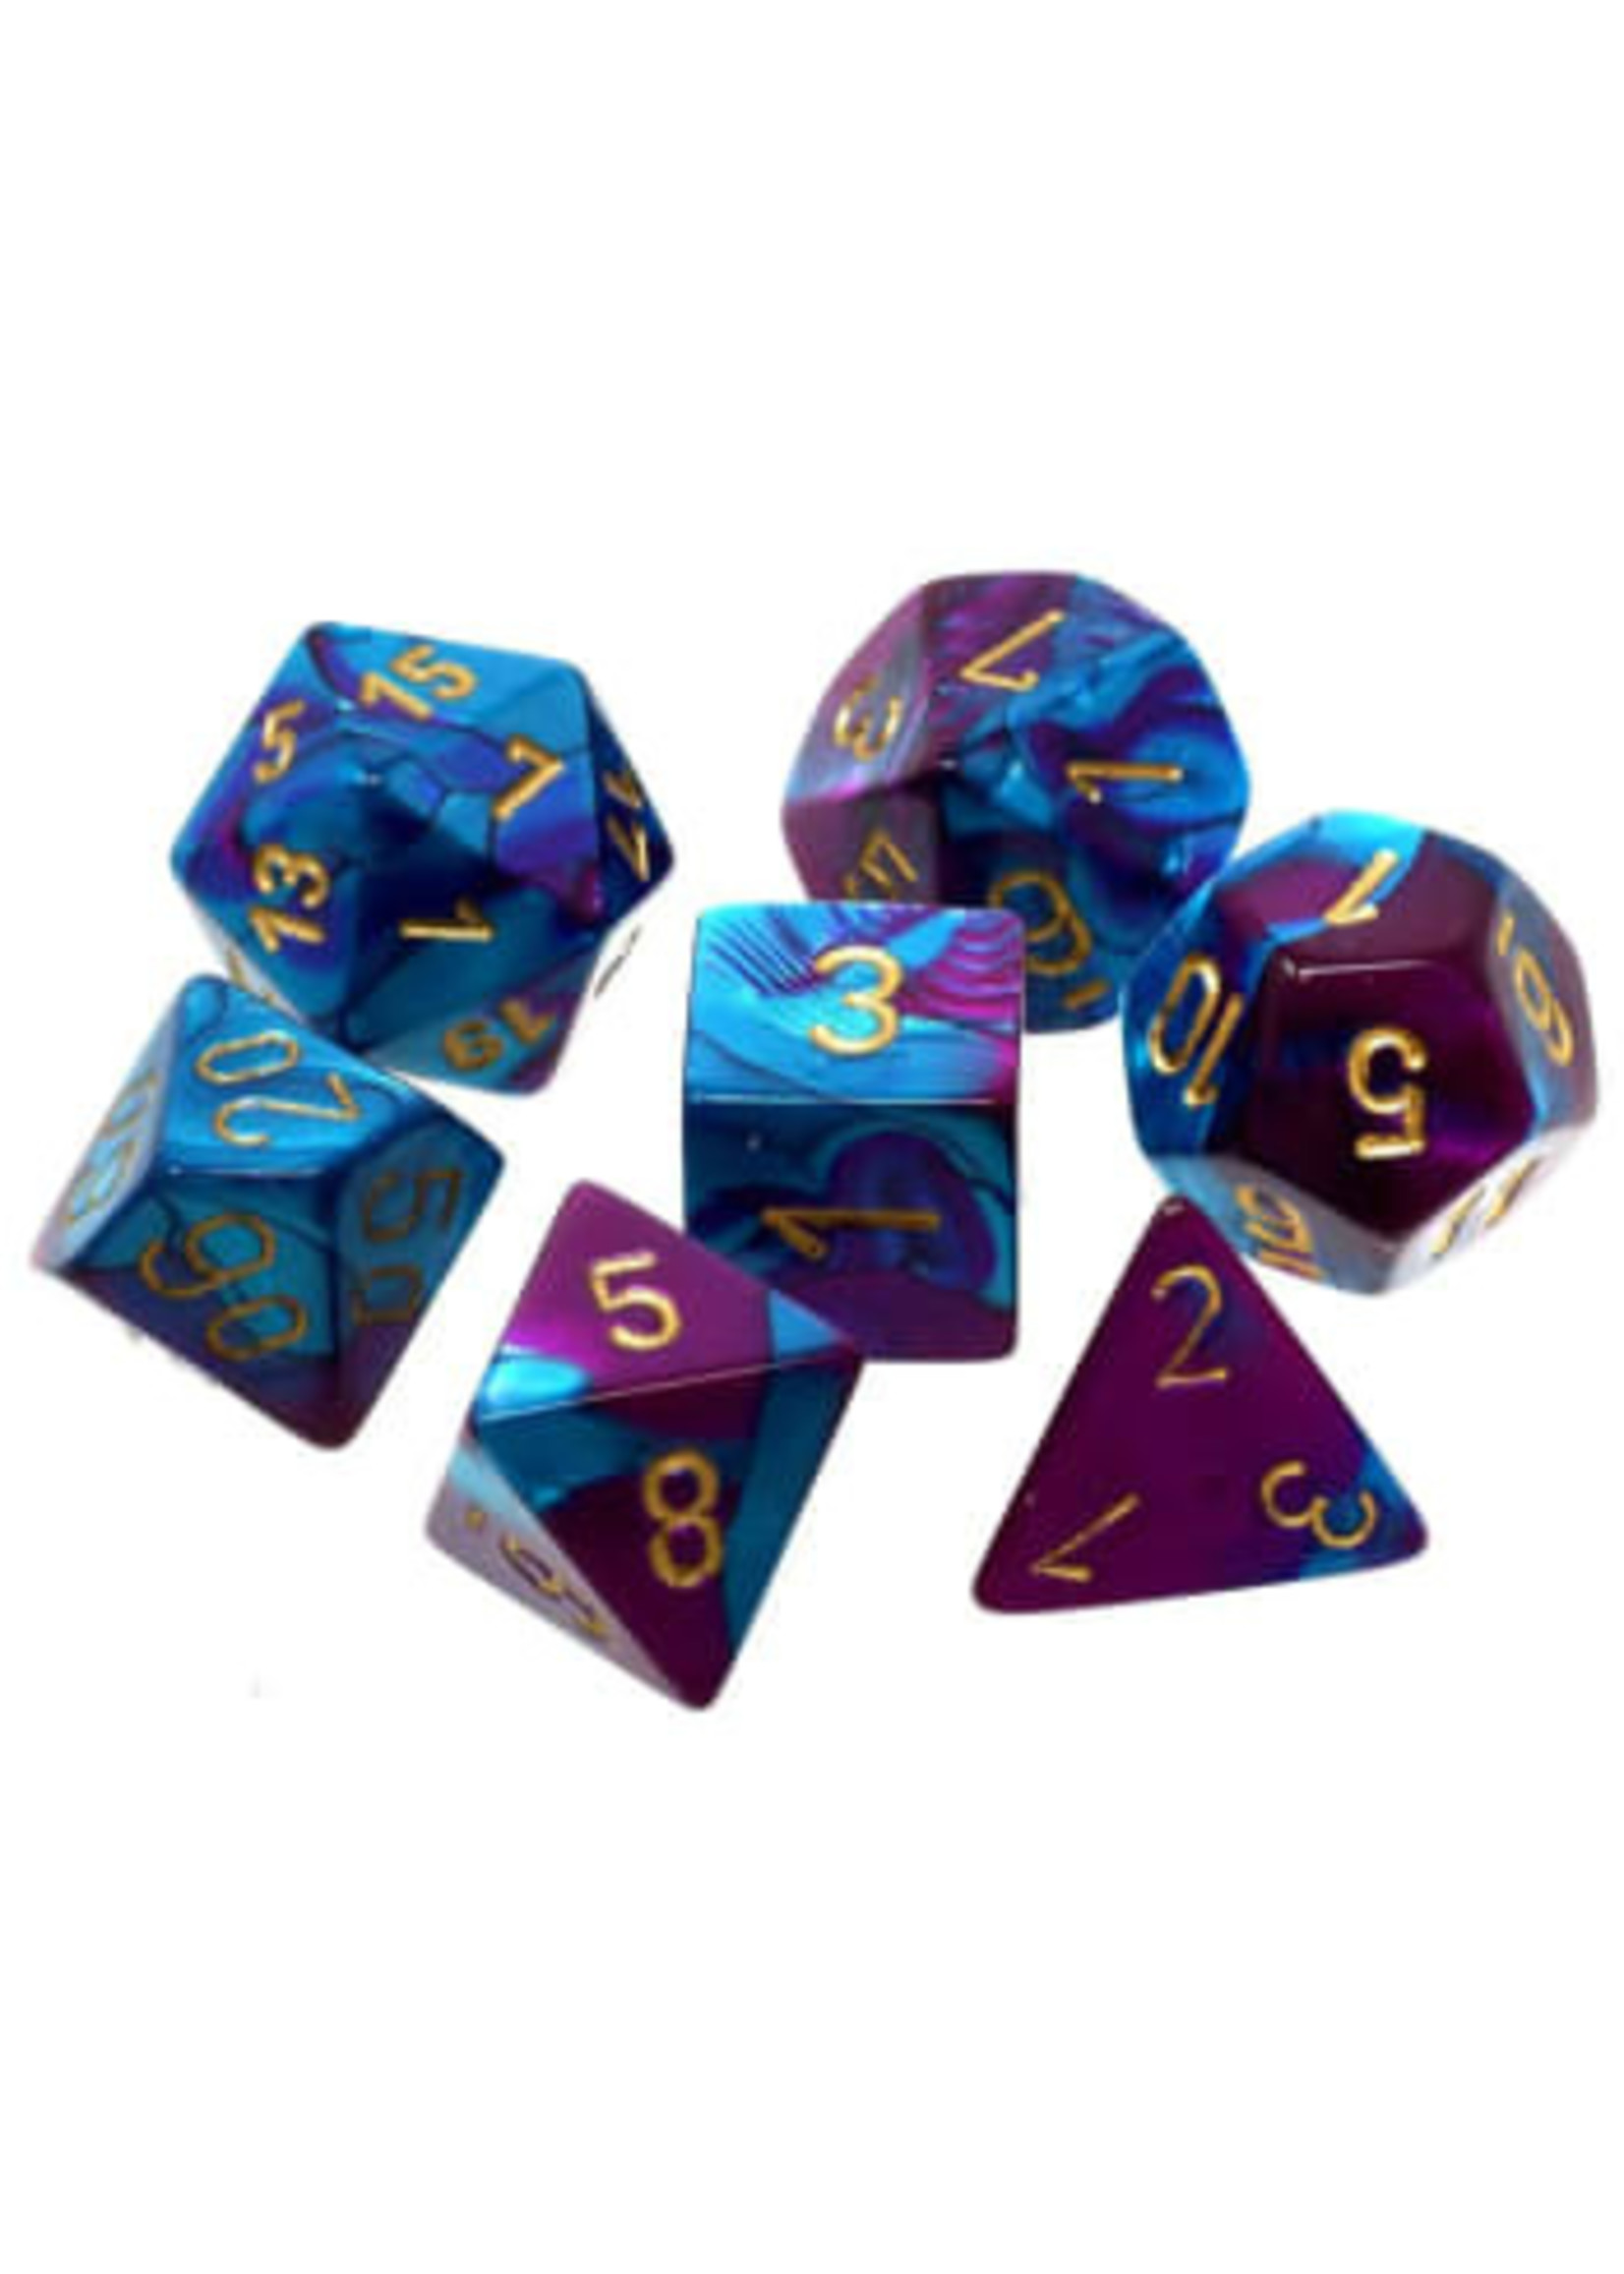 Chessex Gemini Mini 7 Set: Purple and Teal w/ gold